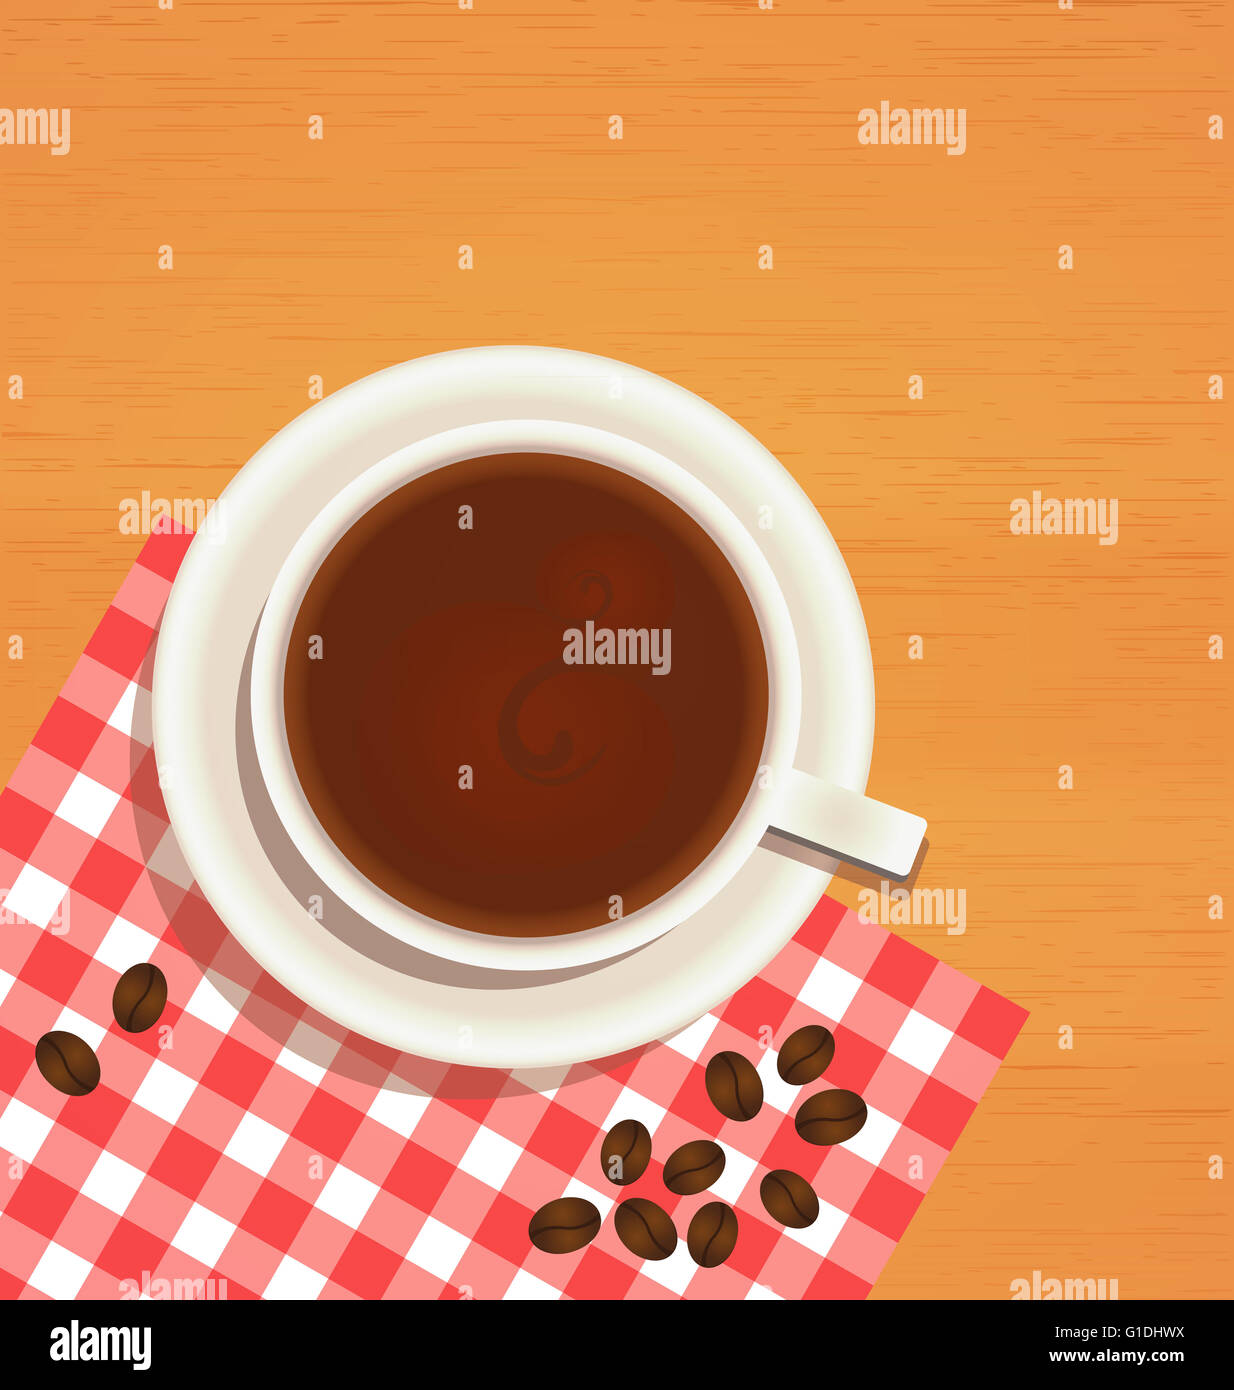 https://c8.alamy.com/comp/G1DHWX/vector-illustration-of-morning-coffee-G1DHWX.jpg